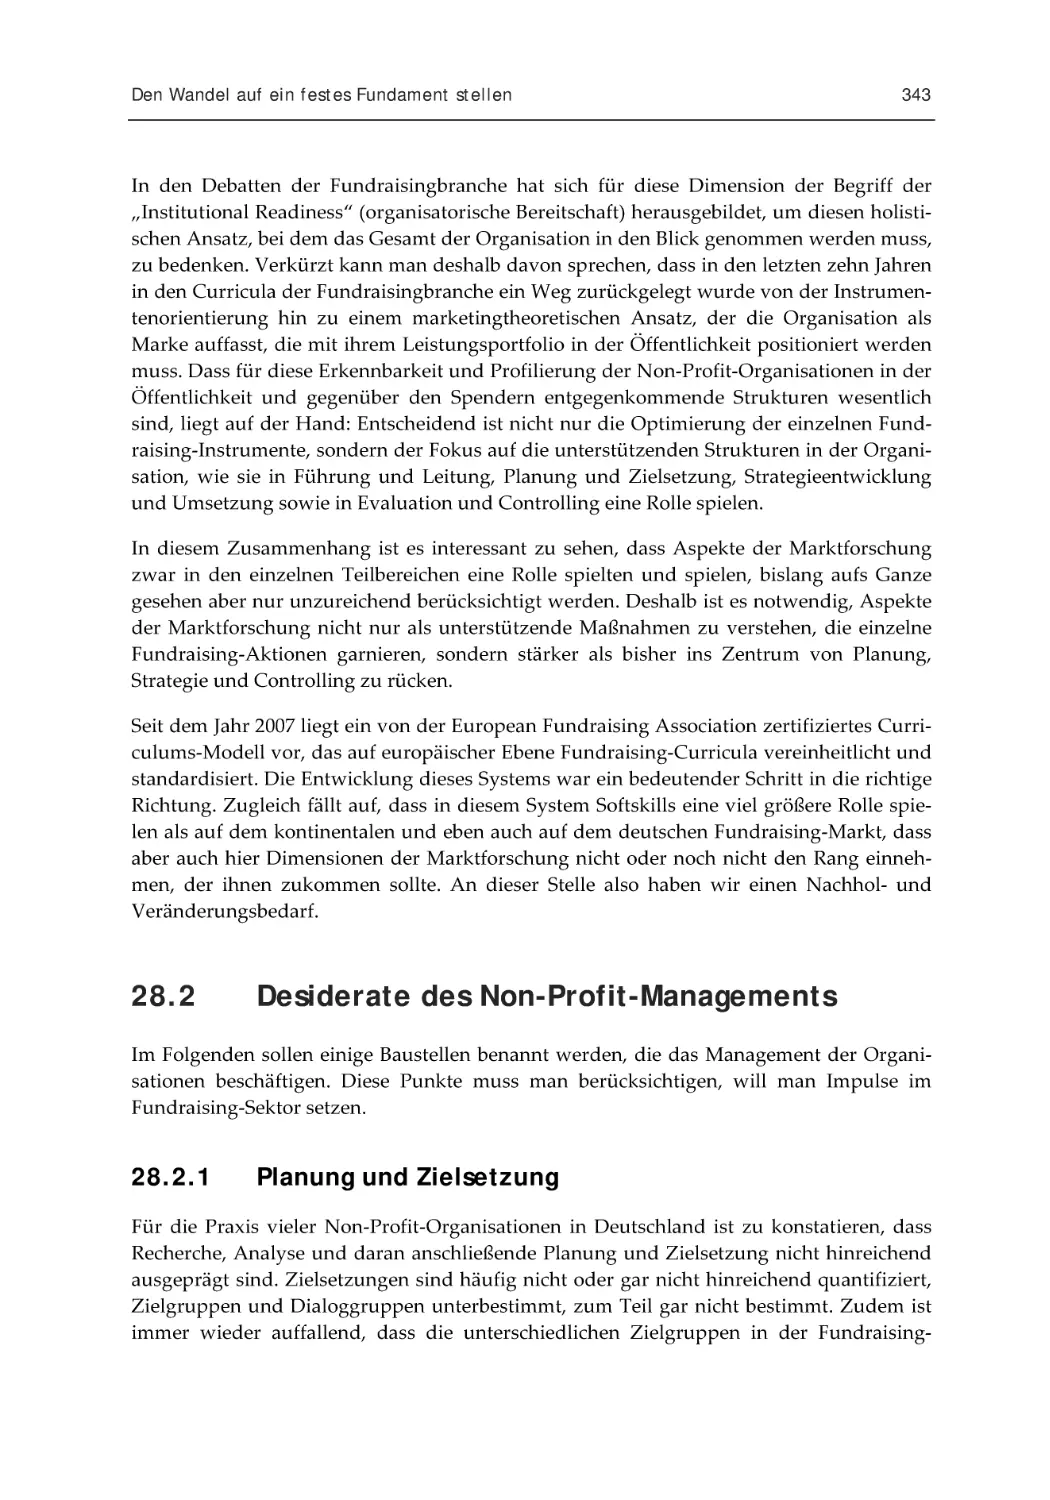 28.2 Desiderate des Non-Profit-Managements
28.2.1 Planung und Zielsetzung